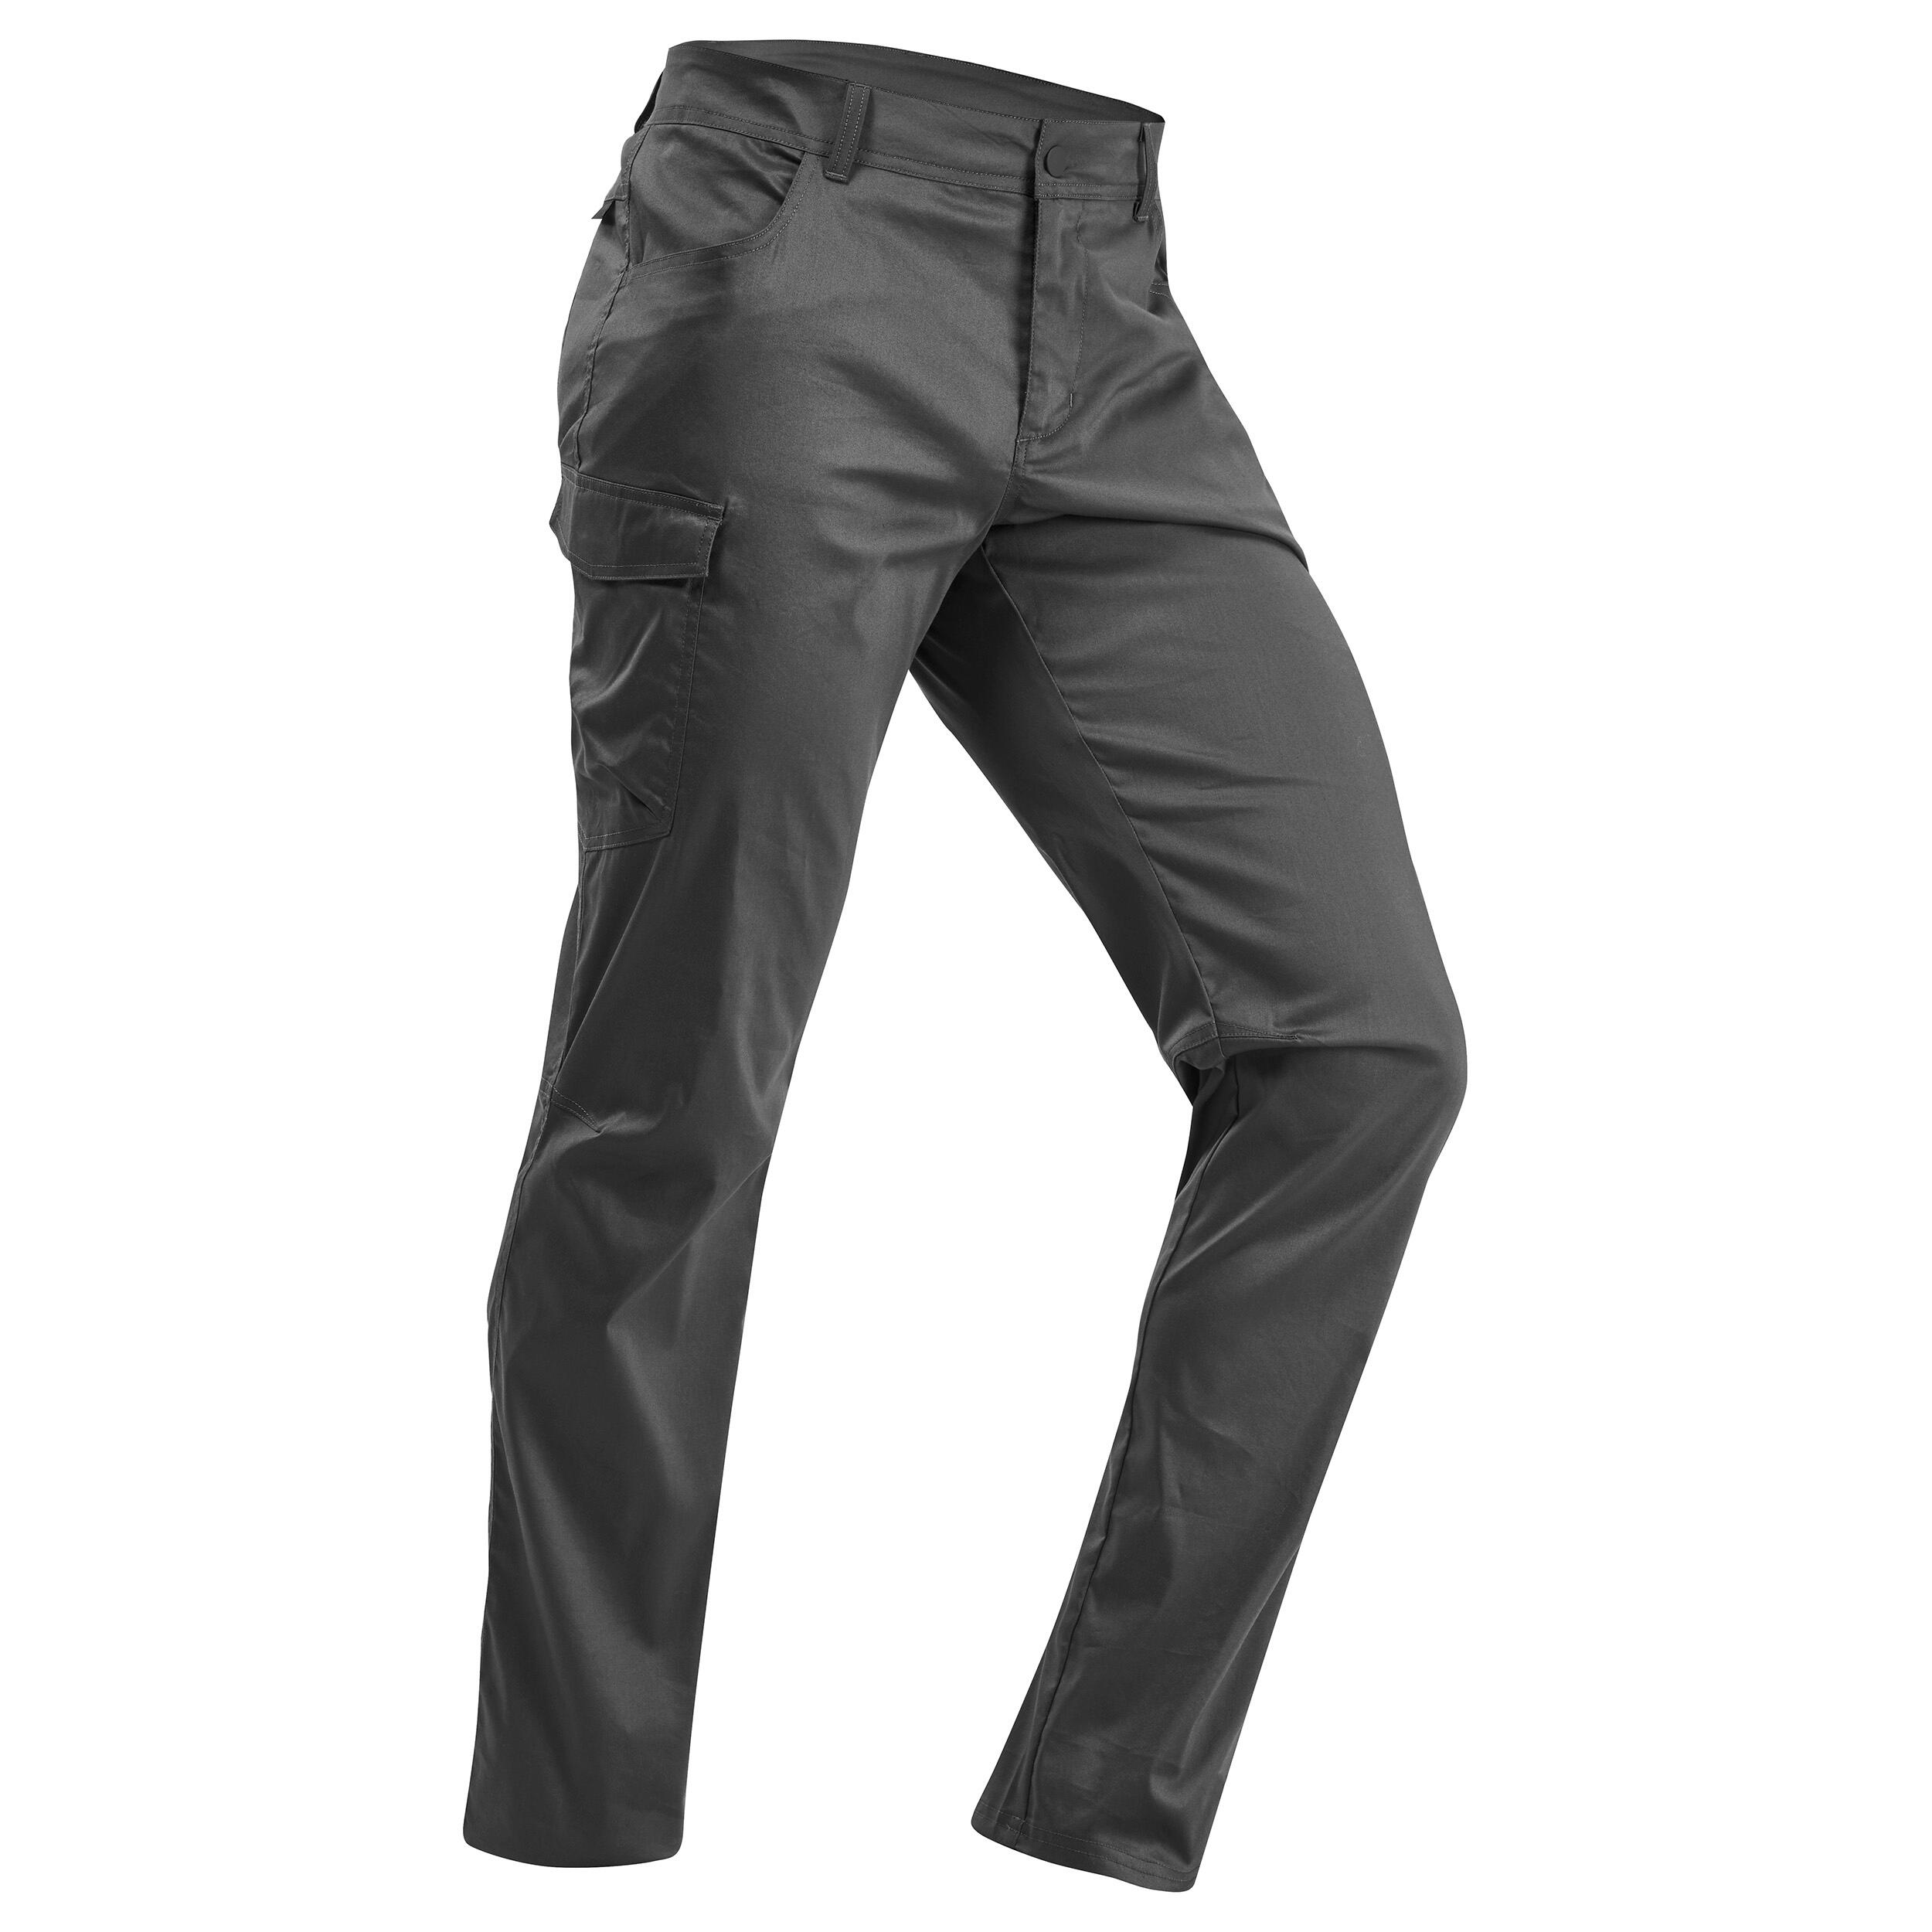 Men’s Hiking Pants - NH 500 Grey